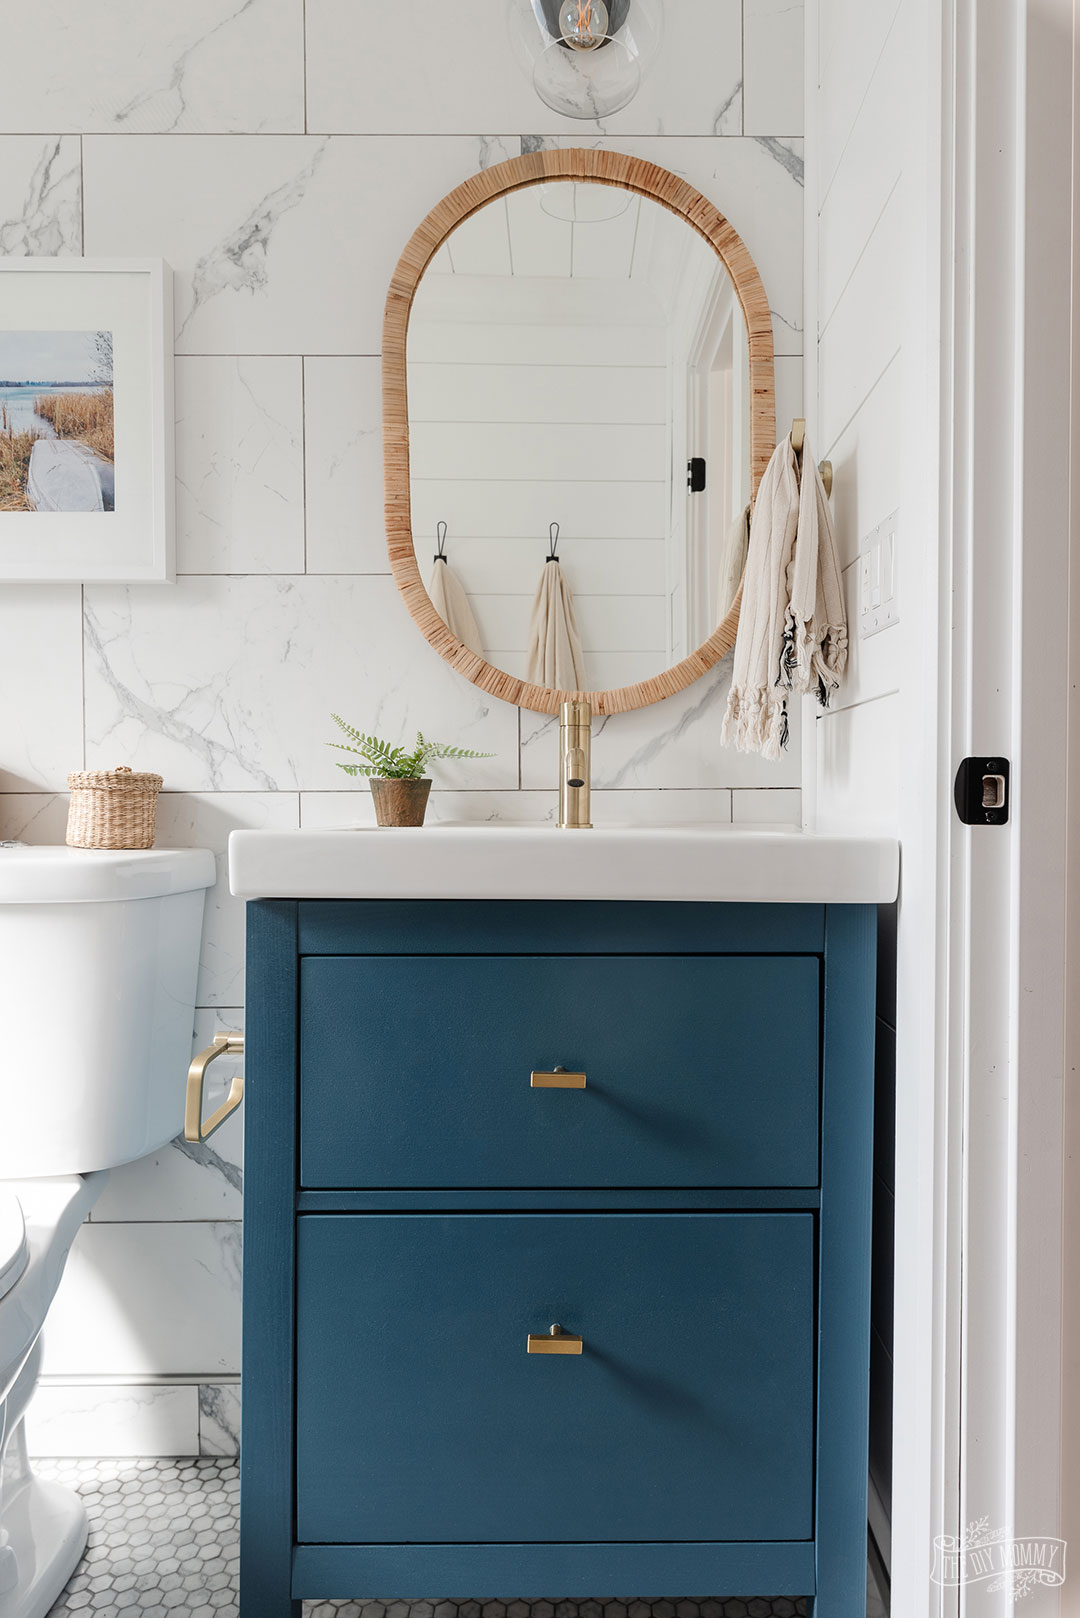 An IKEA bathroom cabinet is painted blue for a modern coastal look.